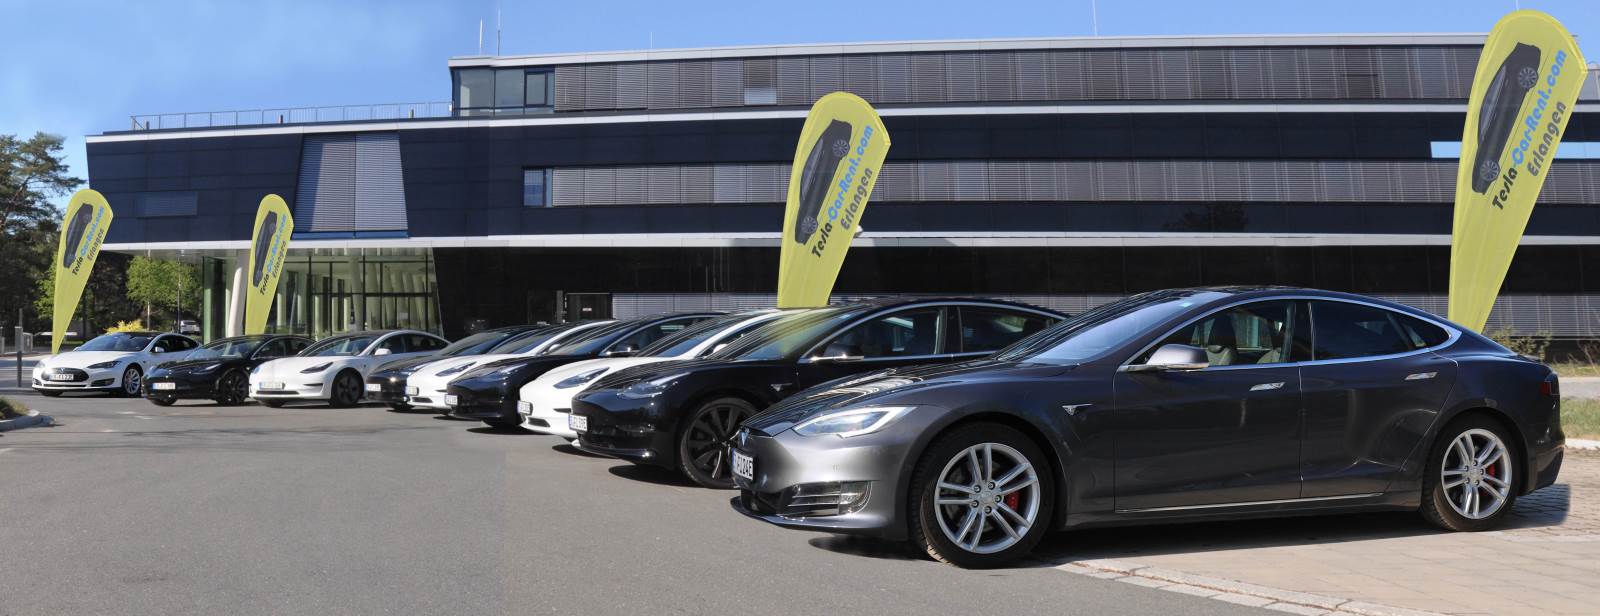 Tesla mieten bei Tesla-Car-Rent, Fuhrpark der Mietwagen | Freie-Pressemitteilungen.de